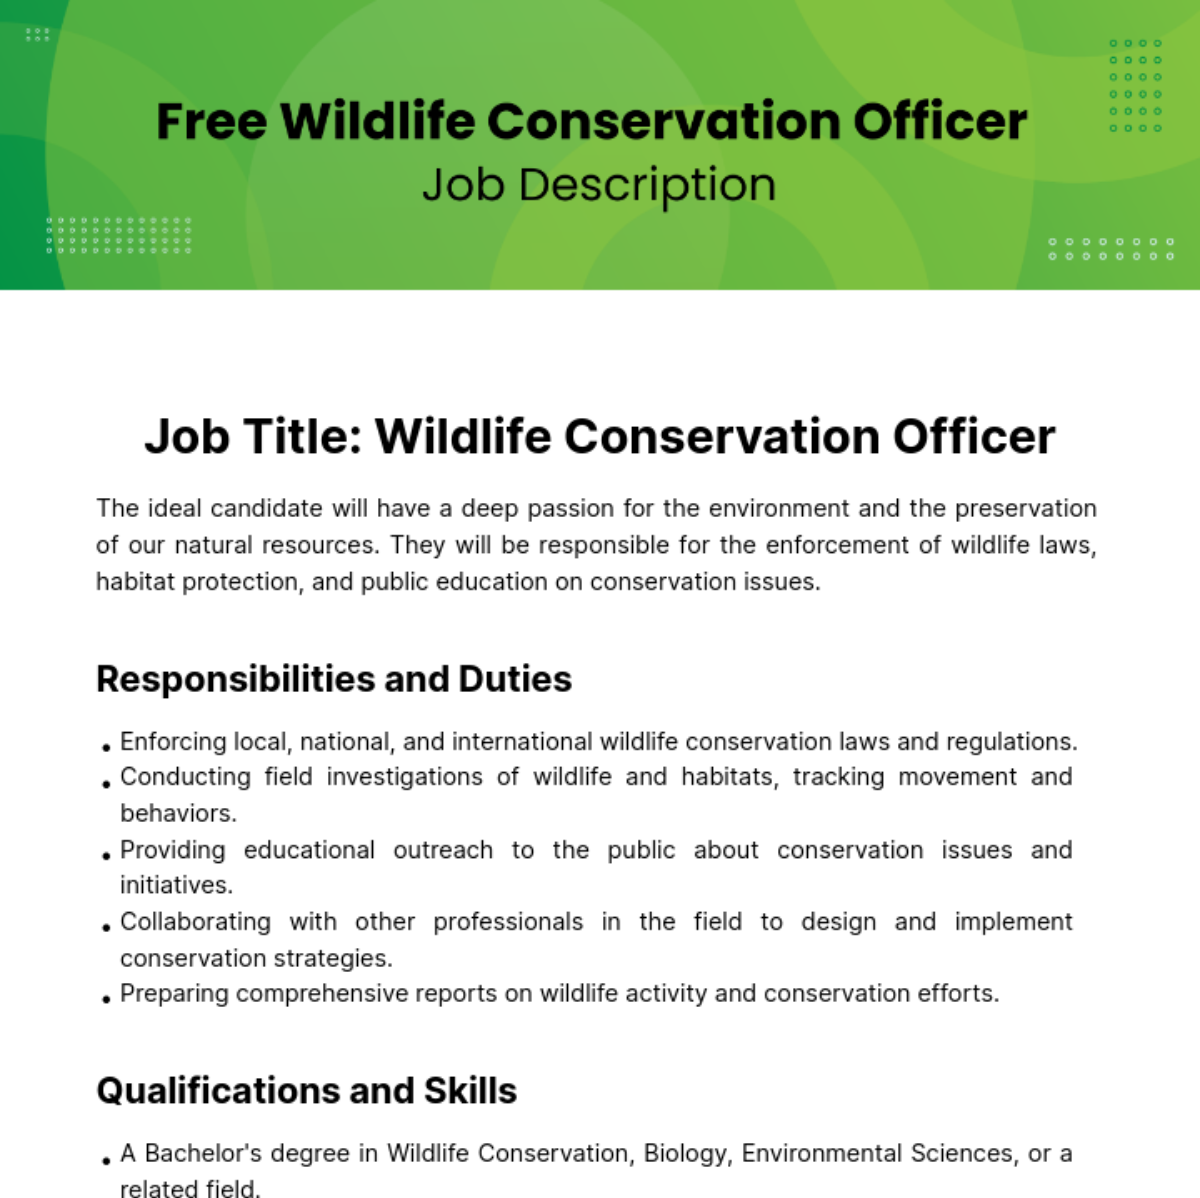 Free Wildlife Conservation Officer Job Description Template